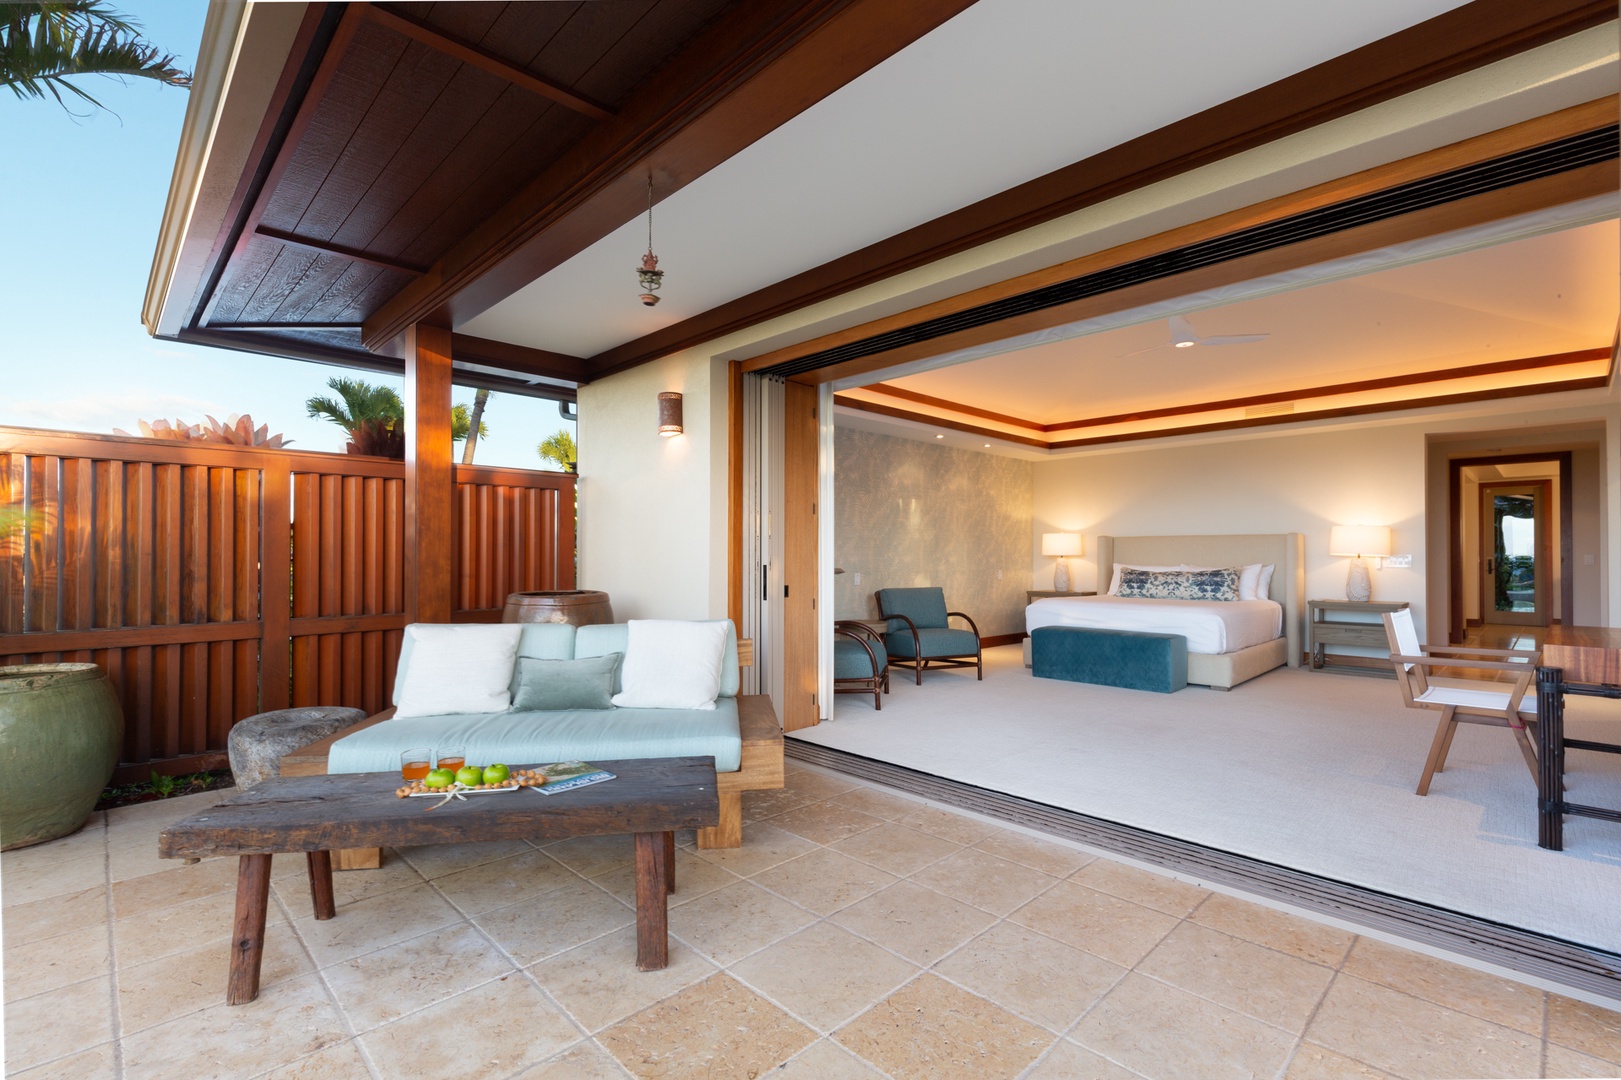 Kailua Kona Vacation Rentals, 4BD Hainoa Estate (102) at Four Seasons Resort at Hualalai - View from the lanai towards the Primary bedroom